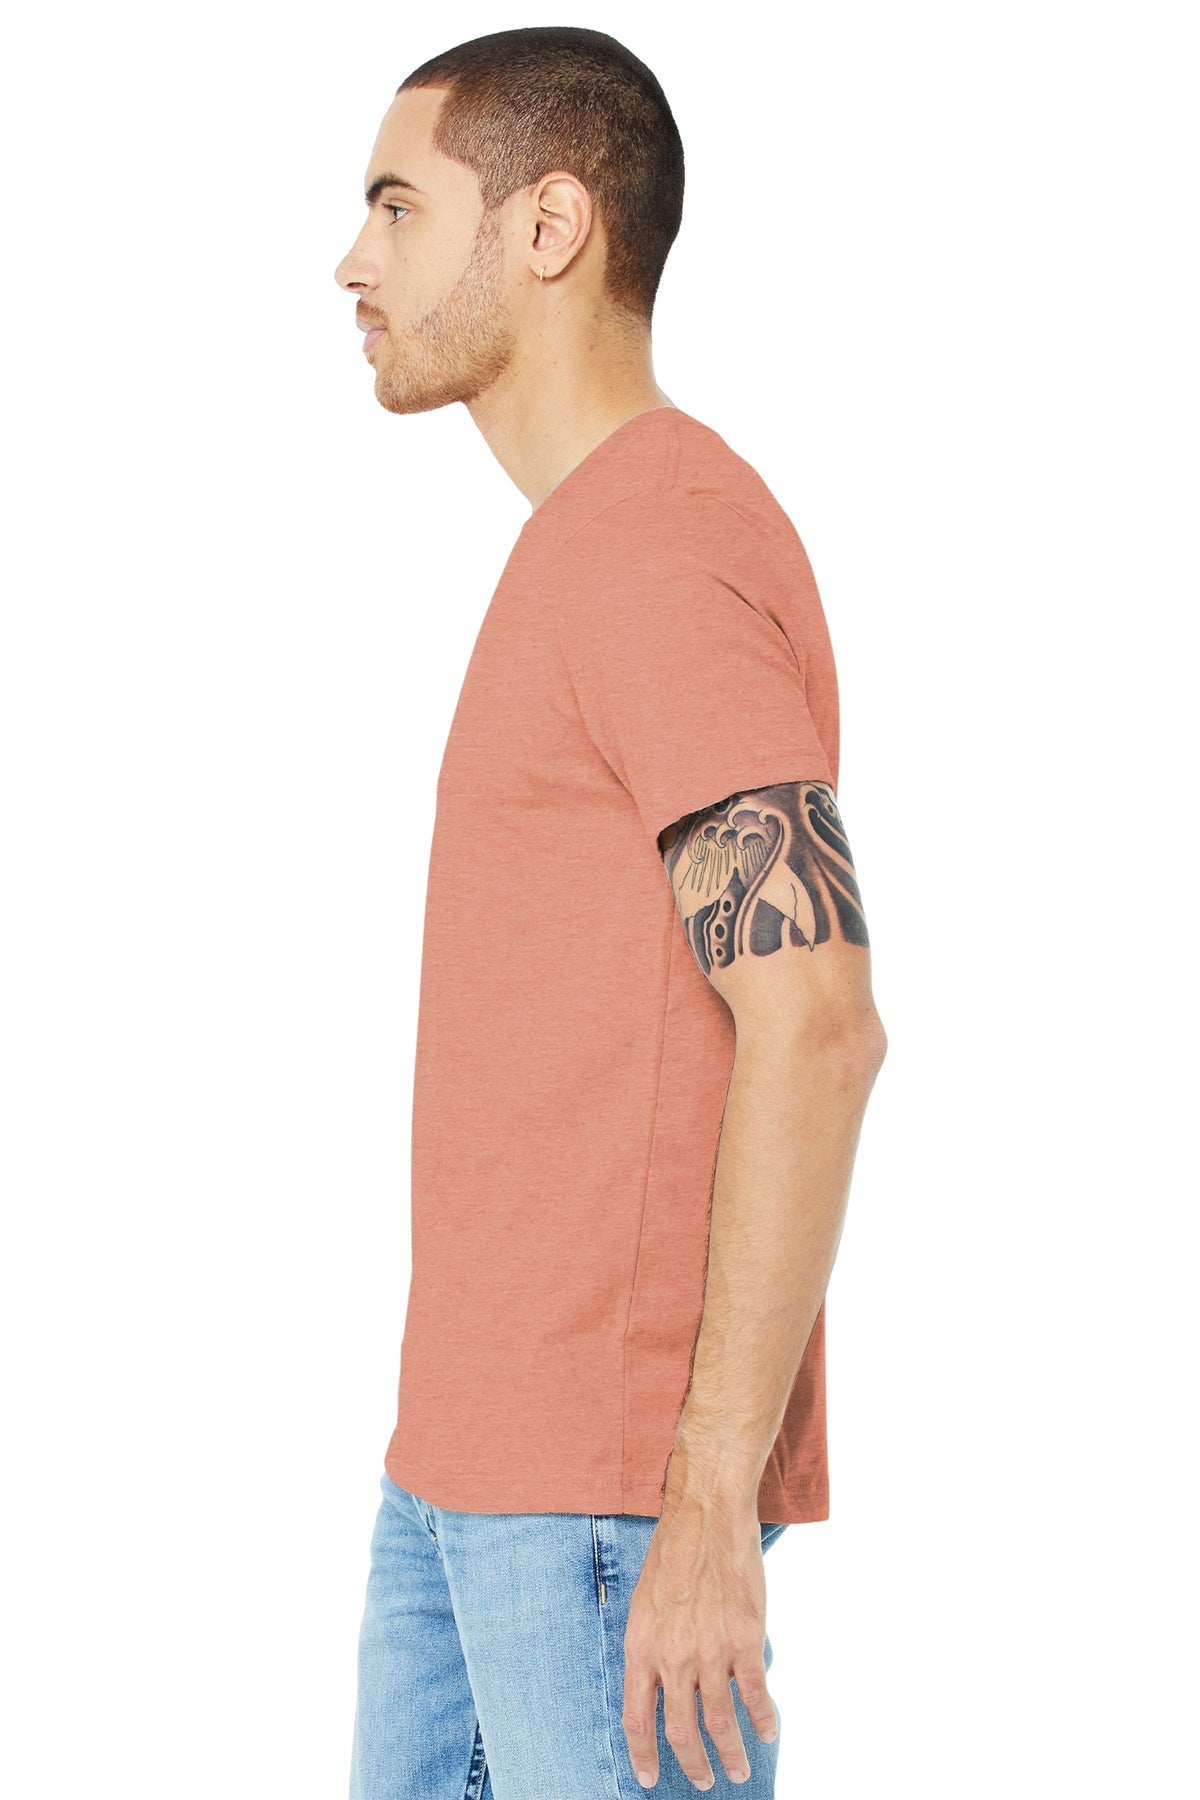 bella + canvas unisex jersey short sleeve t-shirt 3001c heather sunset